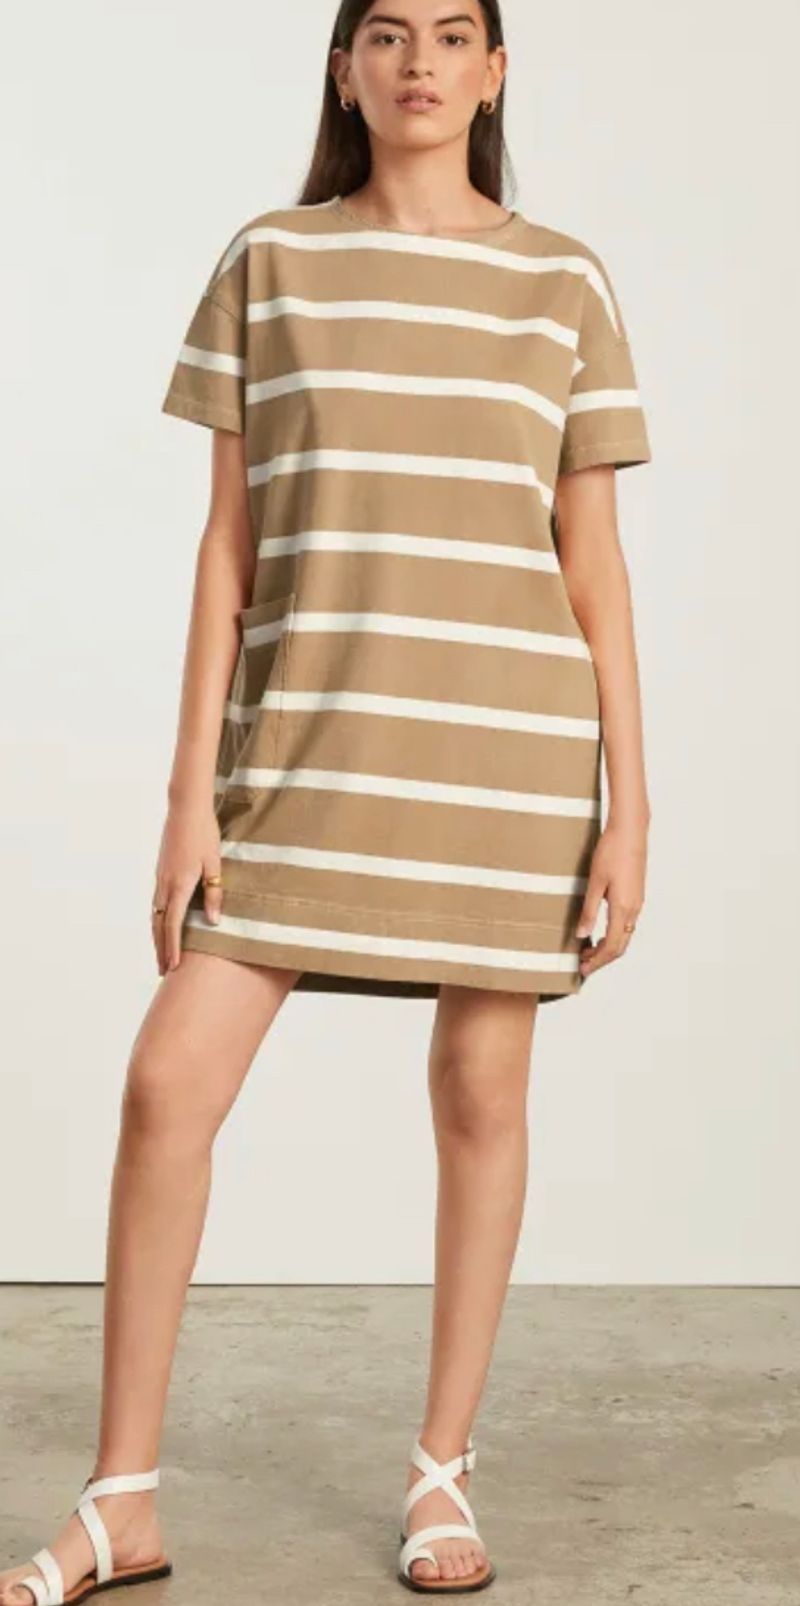 Striped t shirt dress 